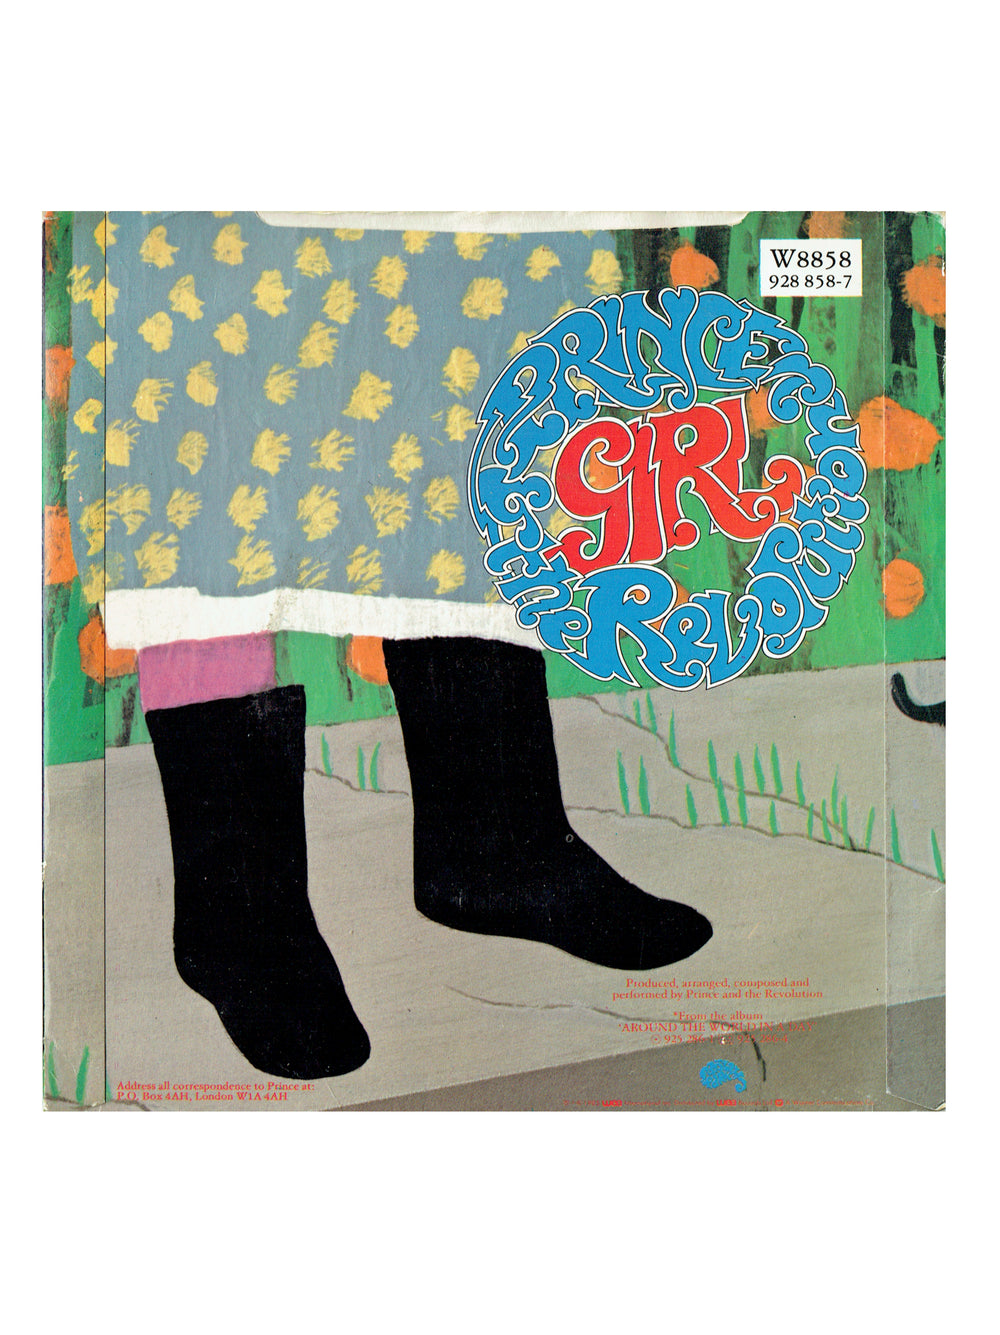 Prince & The Revolution Pop Life / Girl 7 Inch Vinyl Single UK 1985 Release